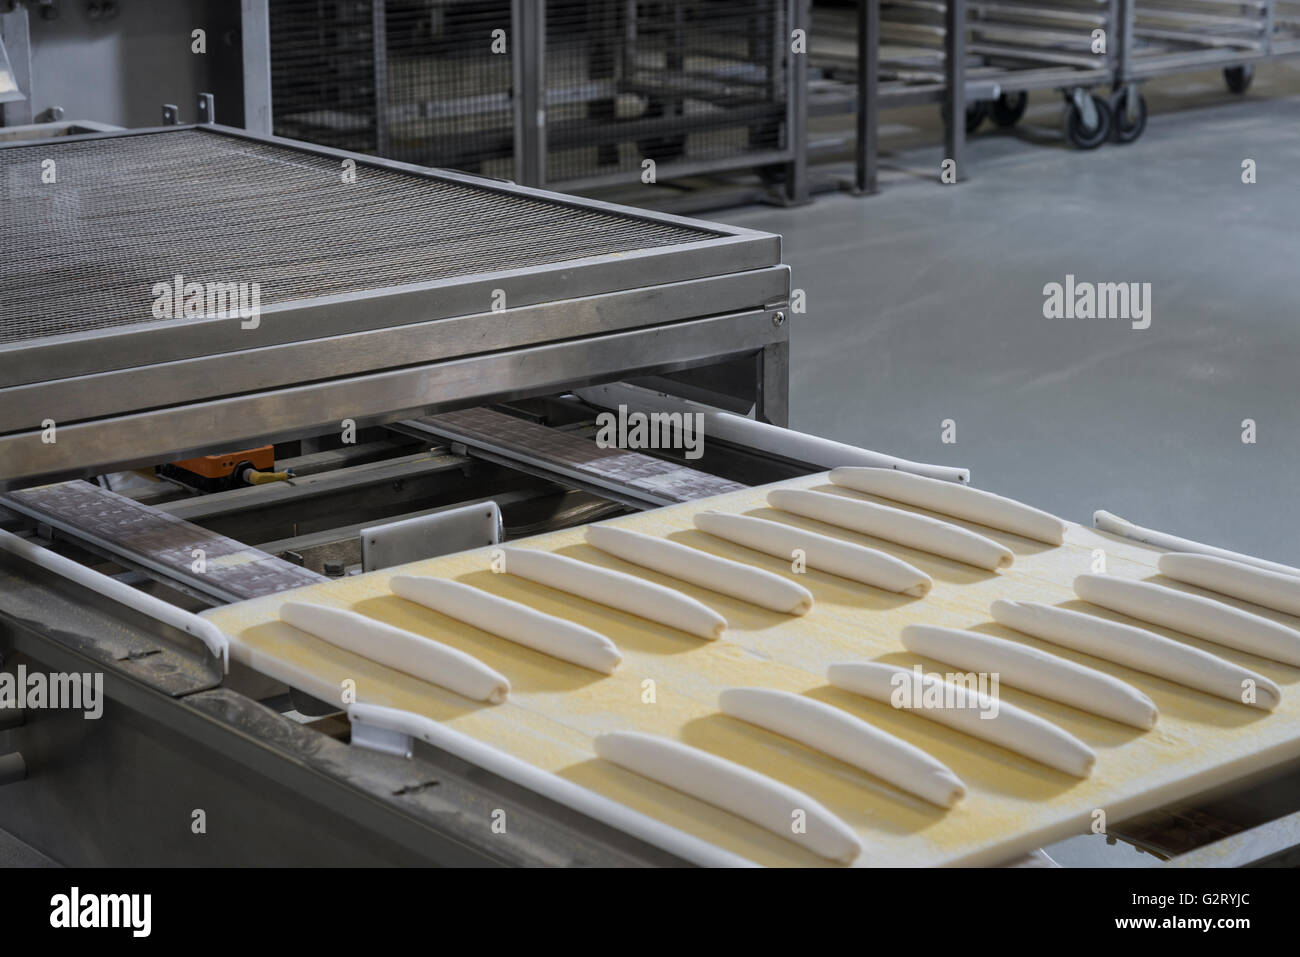 Rohteig auf Conveyor Belt, Brot Bäckerei, Philadelphia USA Stockfoto